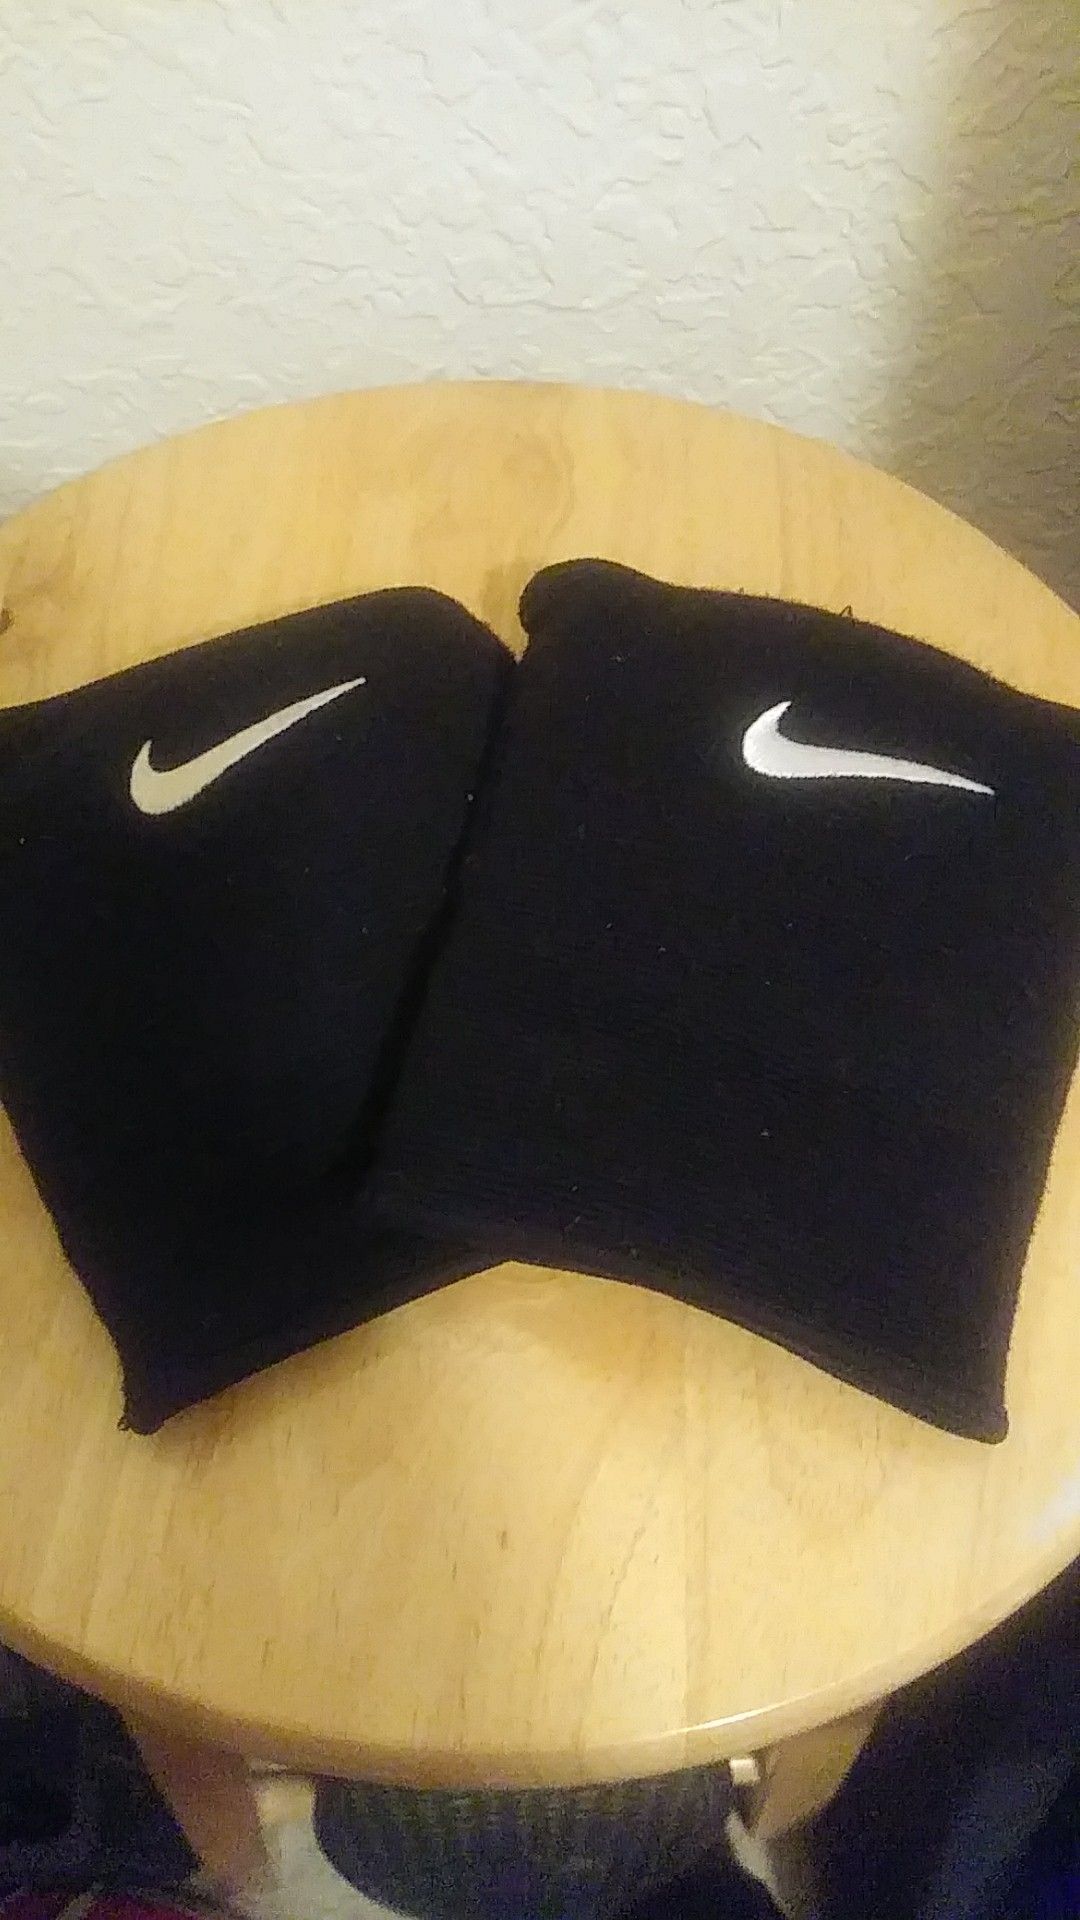 Nike knee pads for sale